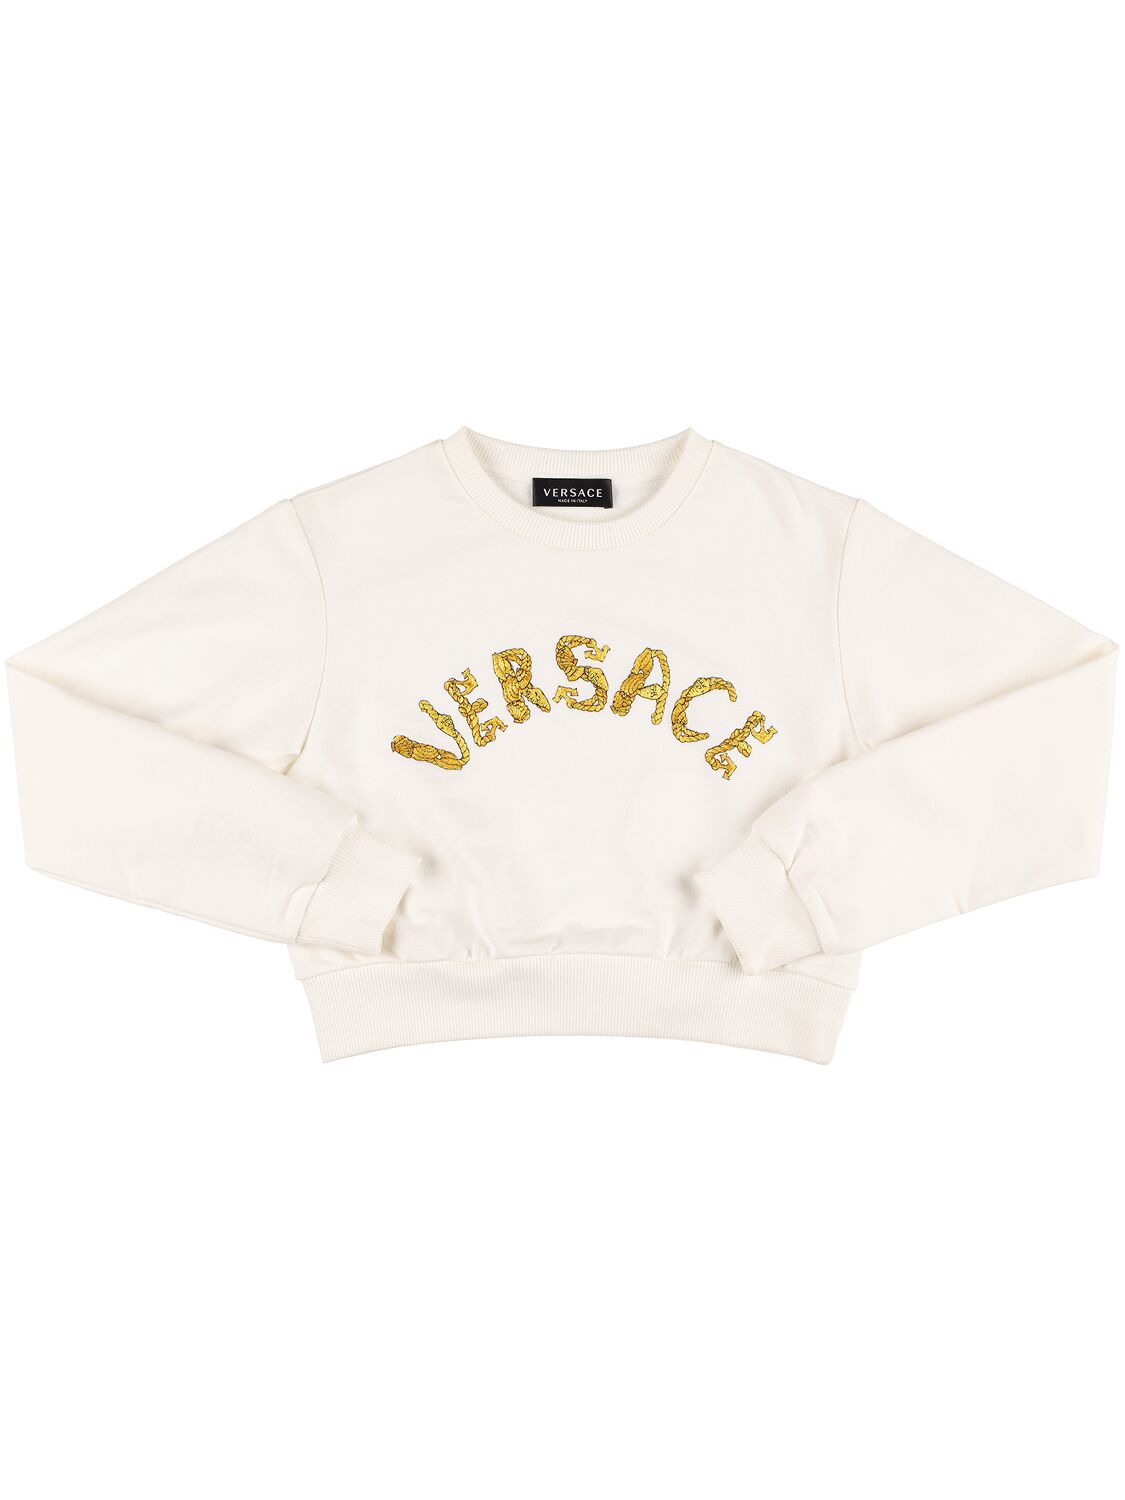 Versace Logo Kids Cotton Sweatshirt In White